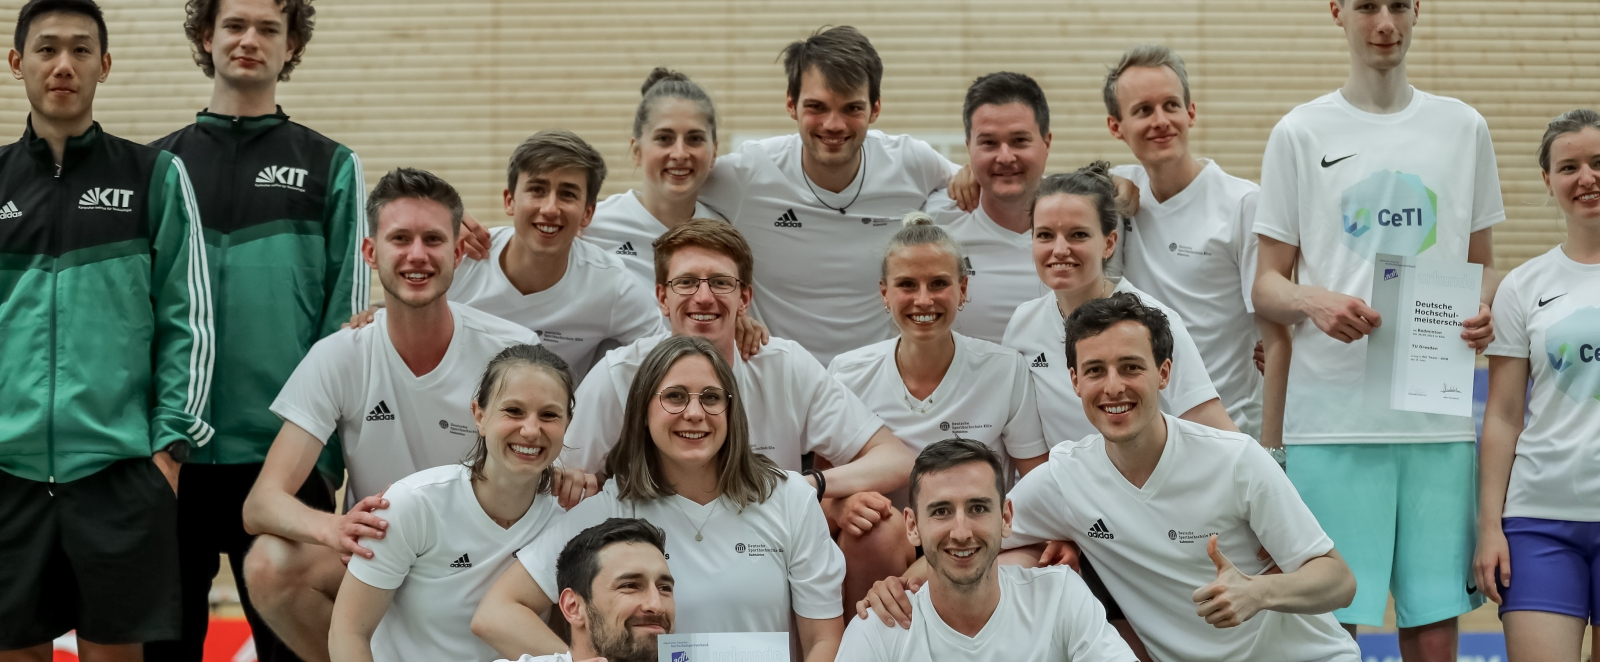 Gruppenbild des Badminton-Sieger-Teams